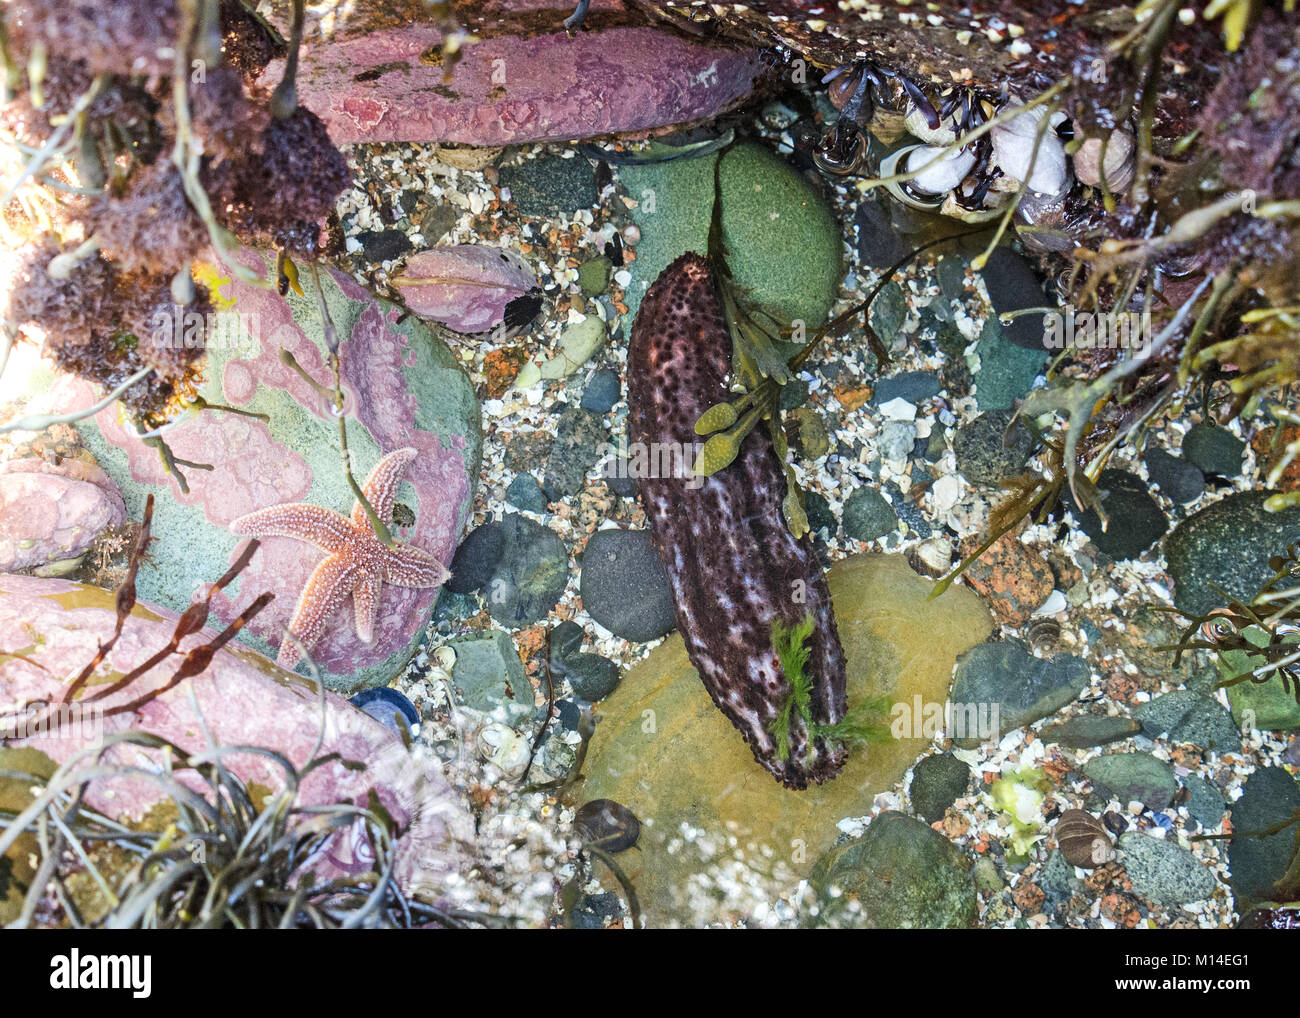 Sea cucumber (Cucumaria frondosa) in a tidepool, Otter Cove, Acadia National Park, Maine Stock Photo